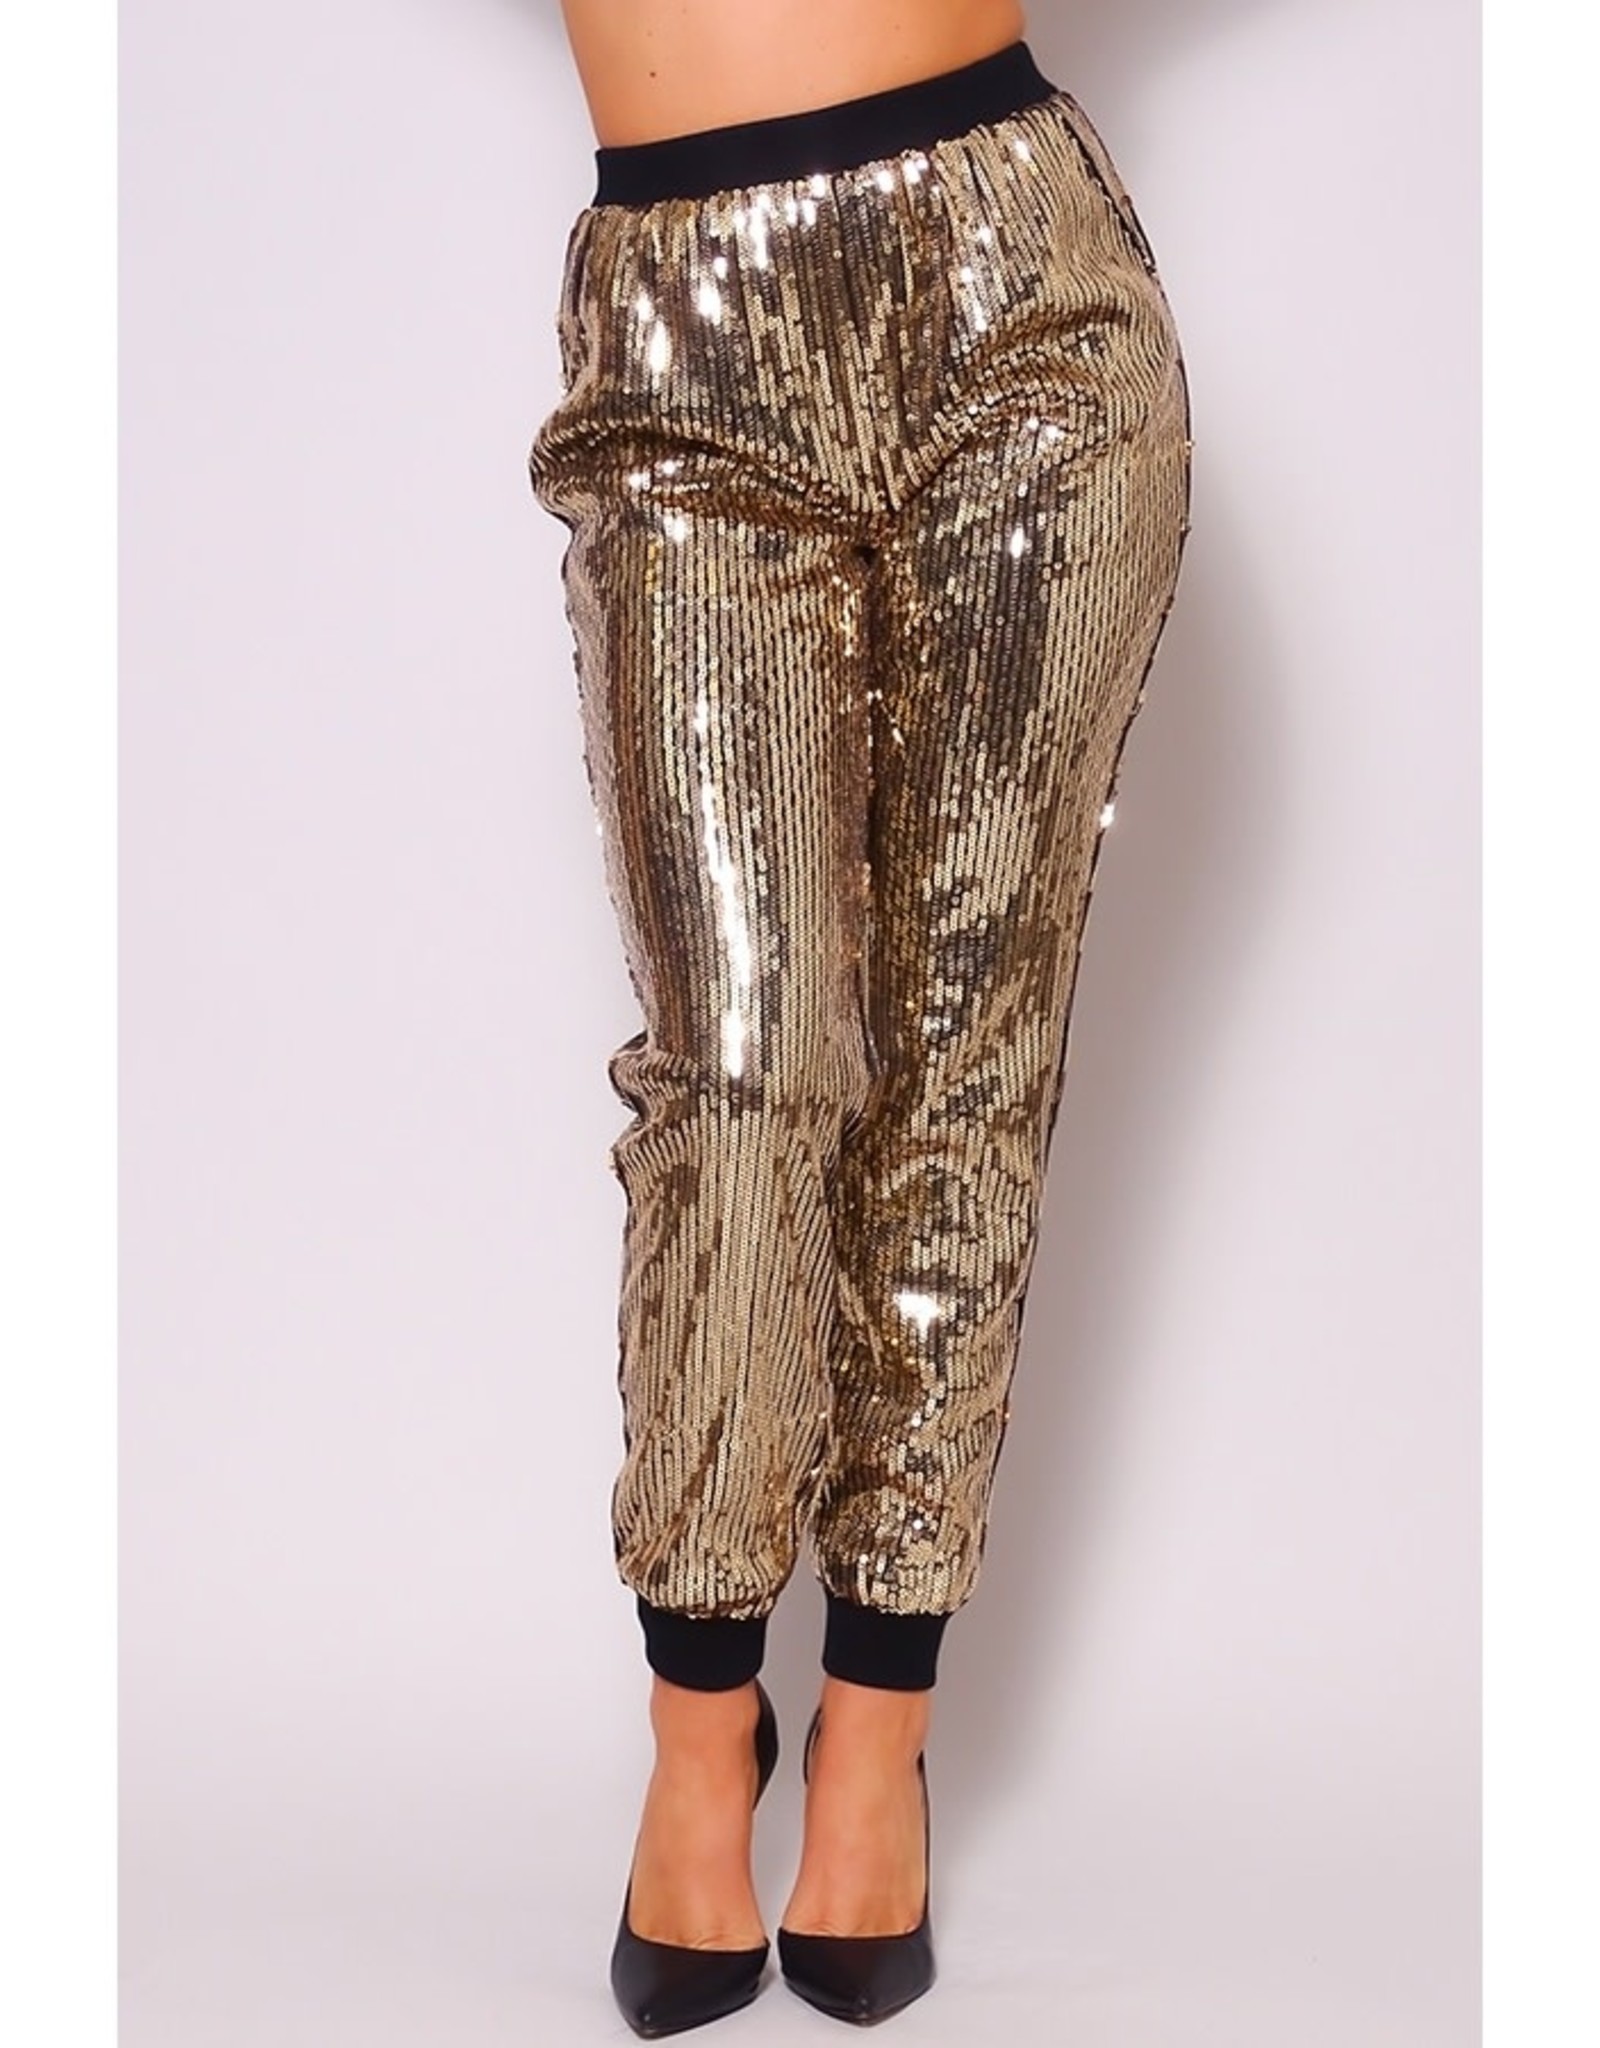 river island gold sequin trousers size 6 32R Straight Leg Elastic Waist |  eBay